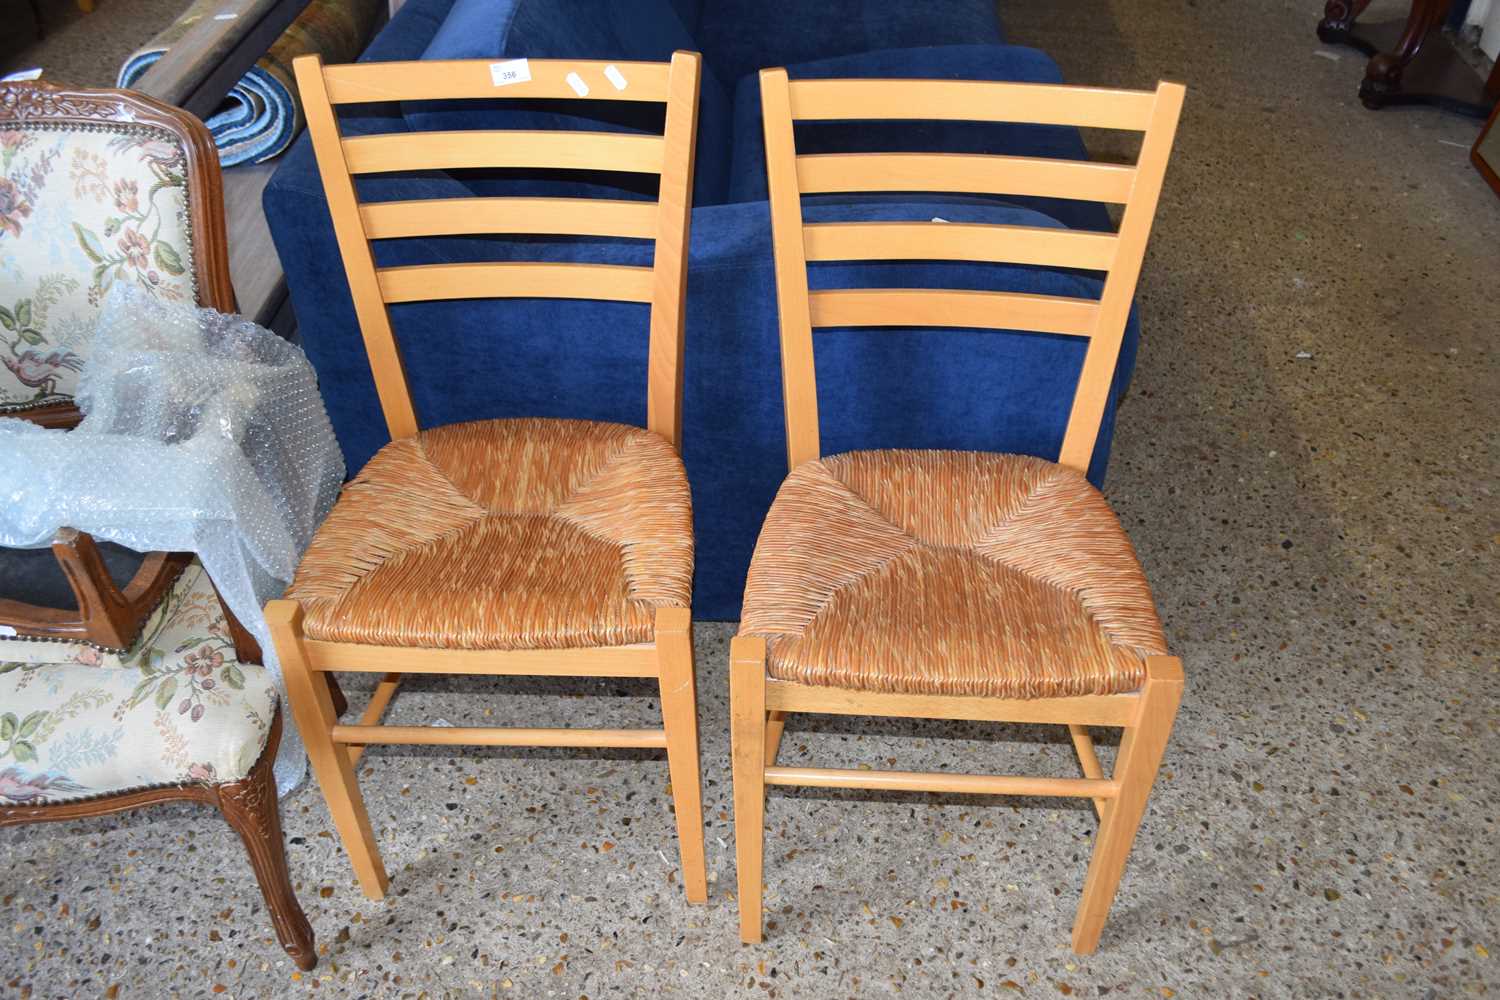 Pair of modern rush seat kitchen chairs